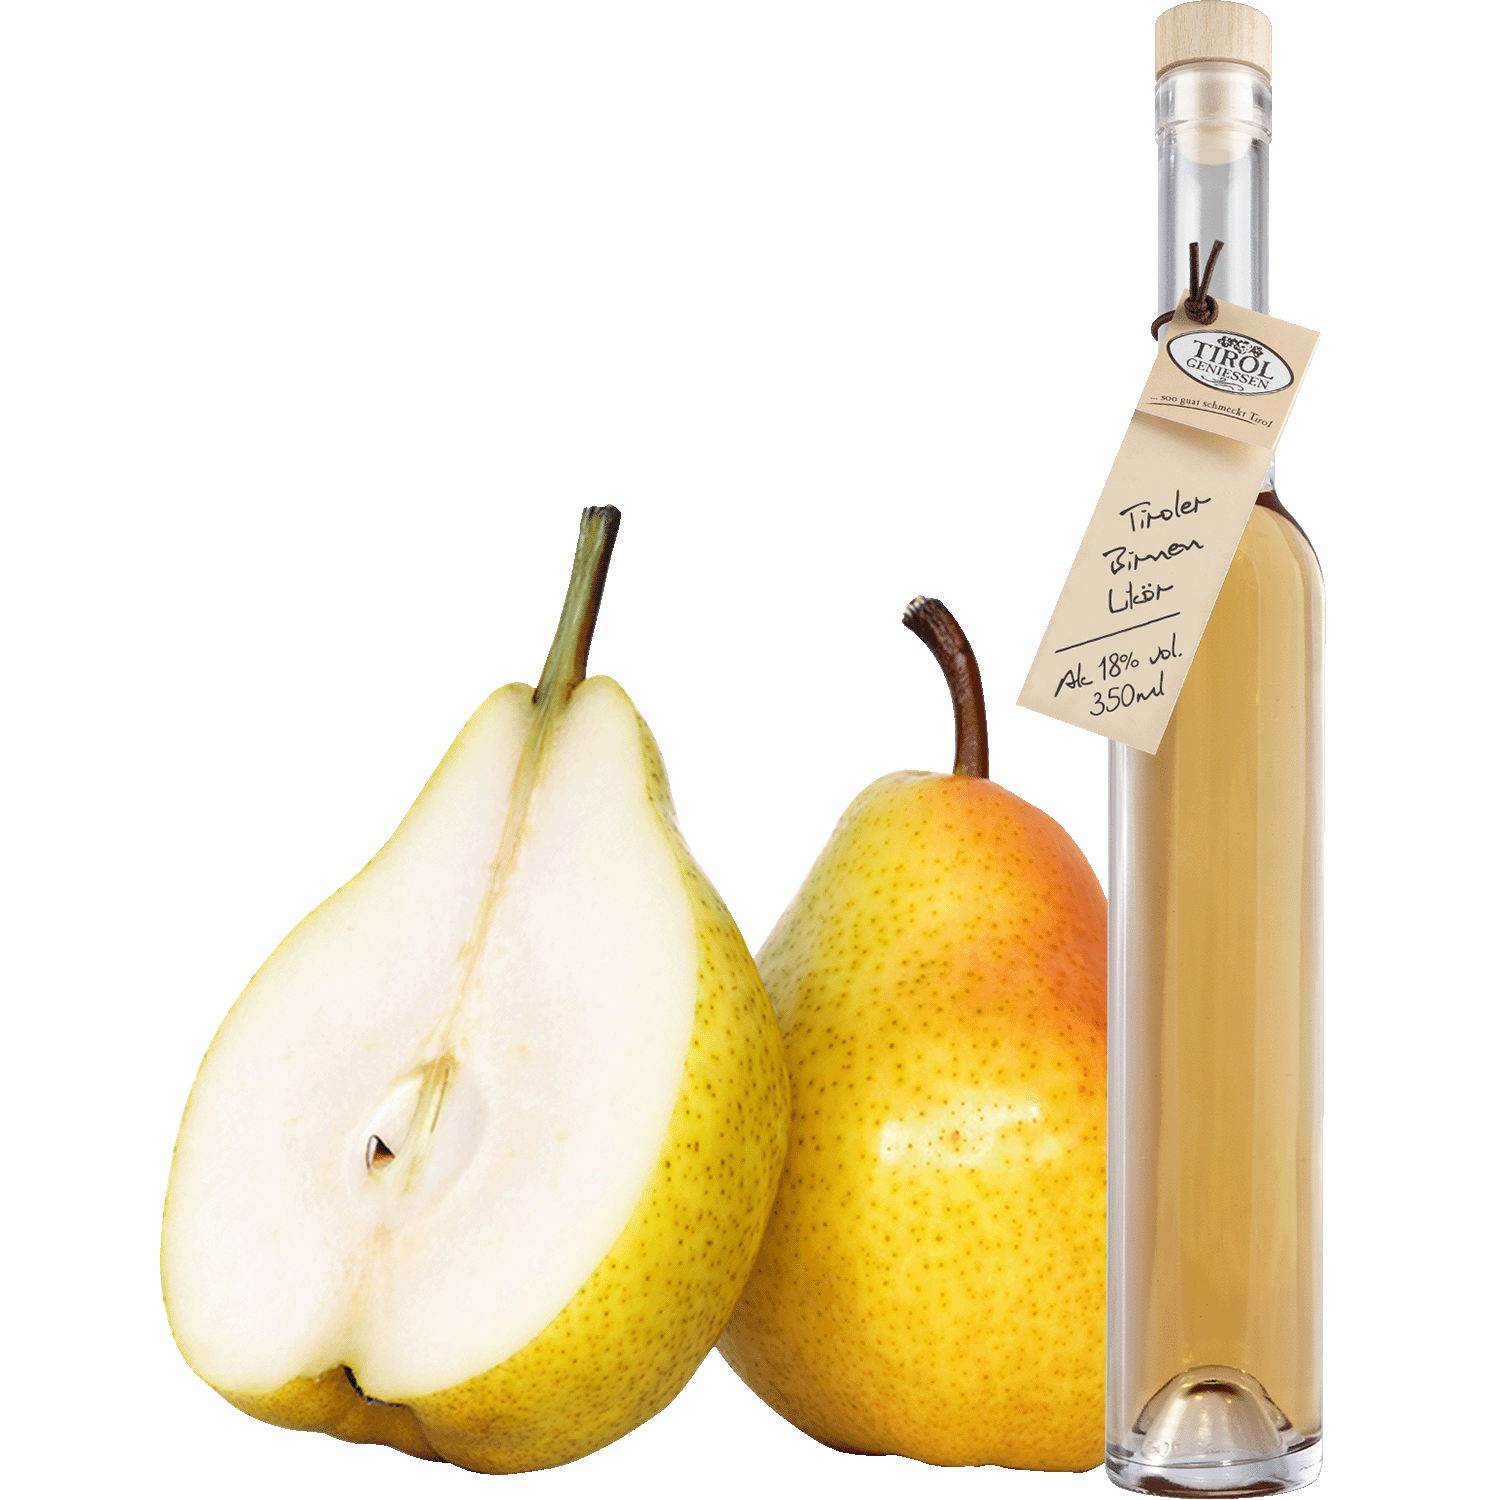 Pear Liqueur in gift bottle from Austria from Tirol Geniessen